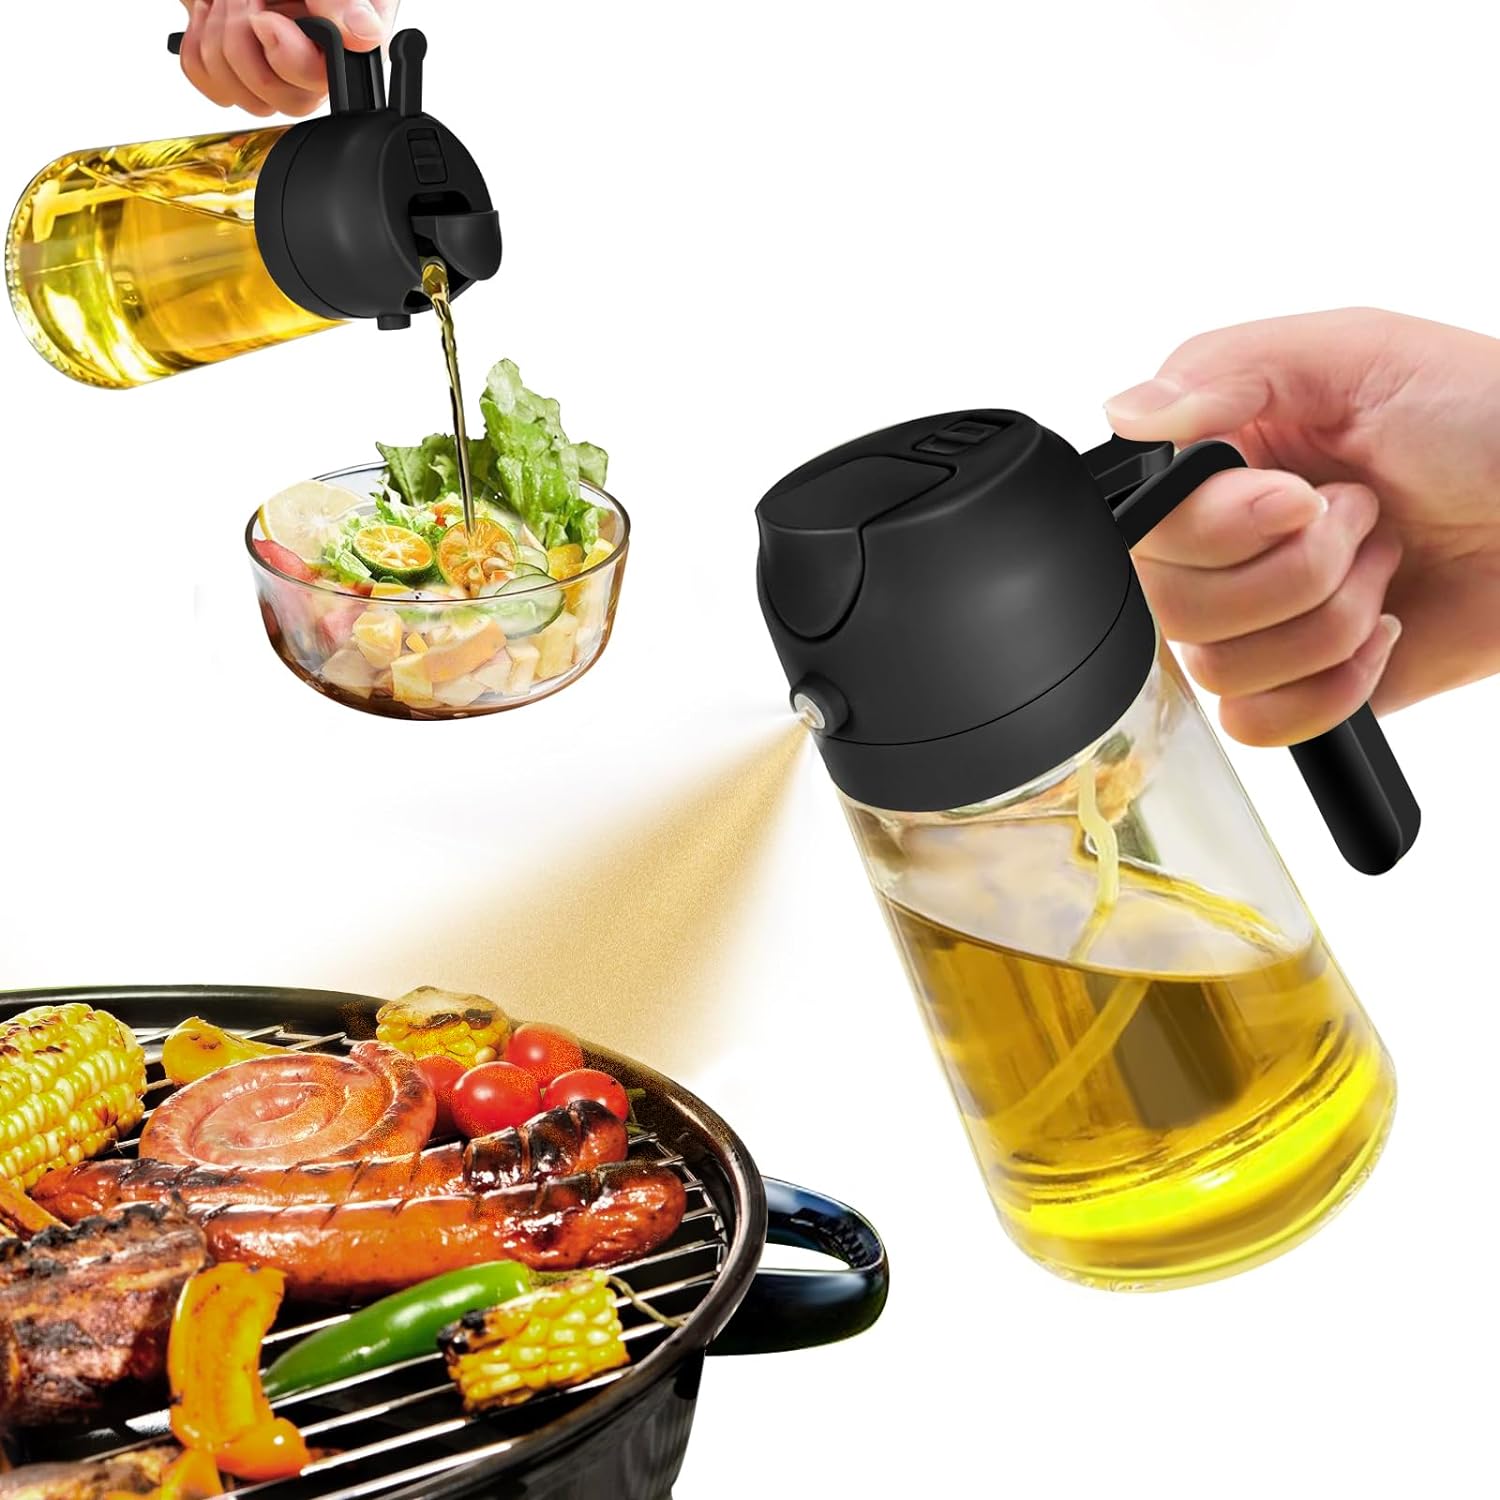 YARRAMATE Olive Oil Dispenser, 2 in 1 Oil Sprayer for Cooking